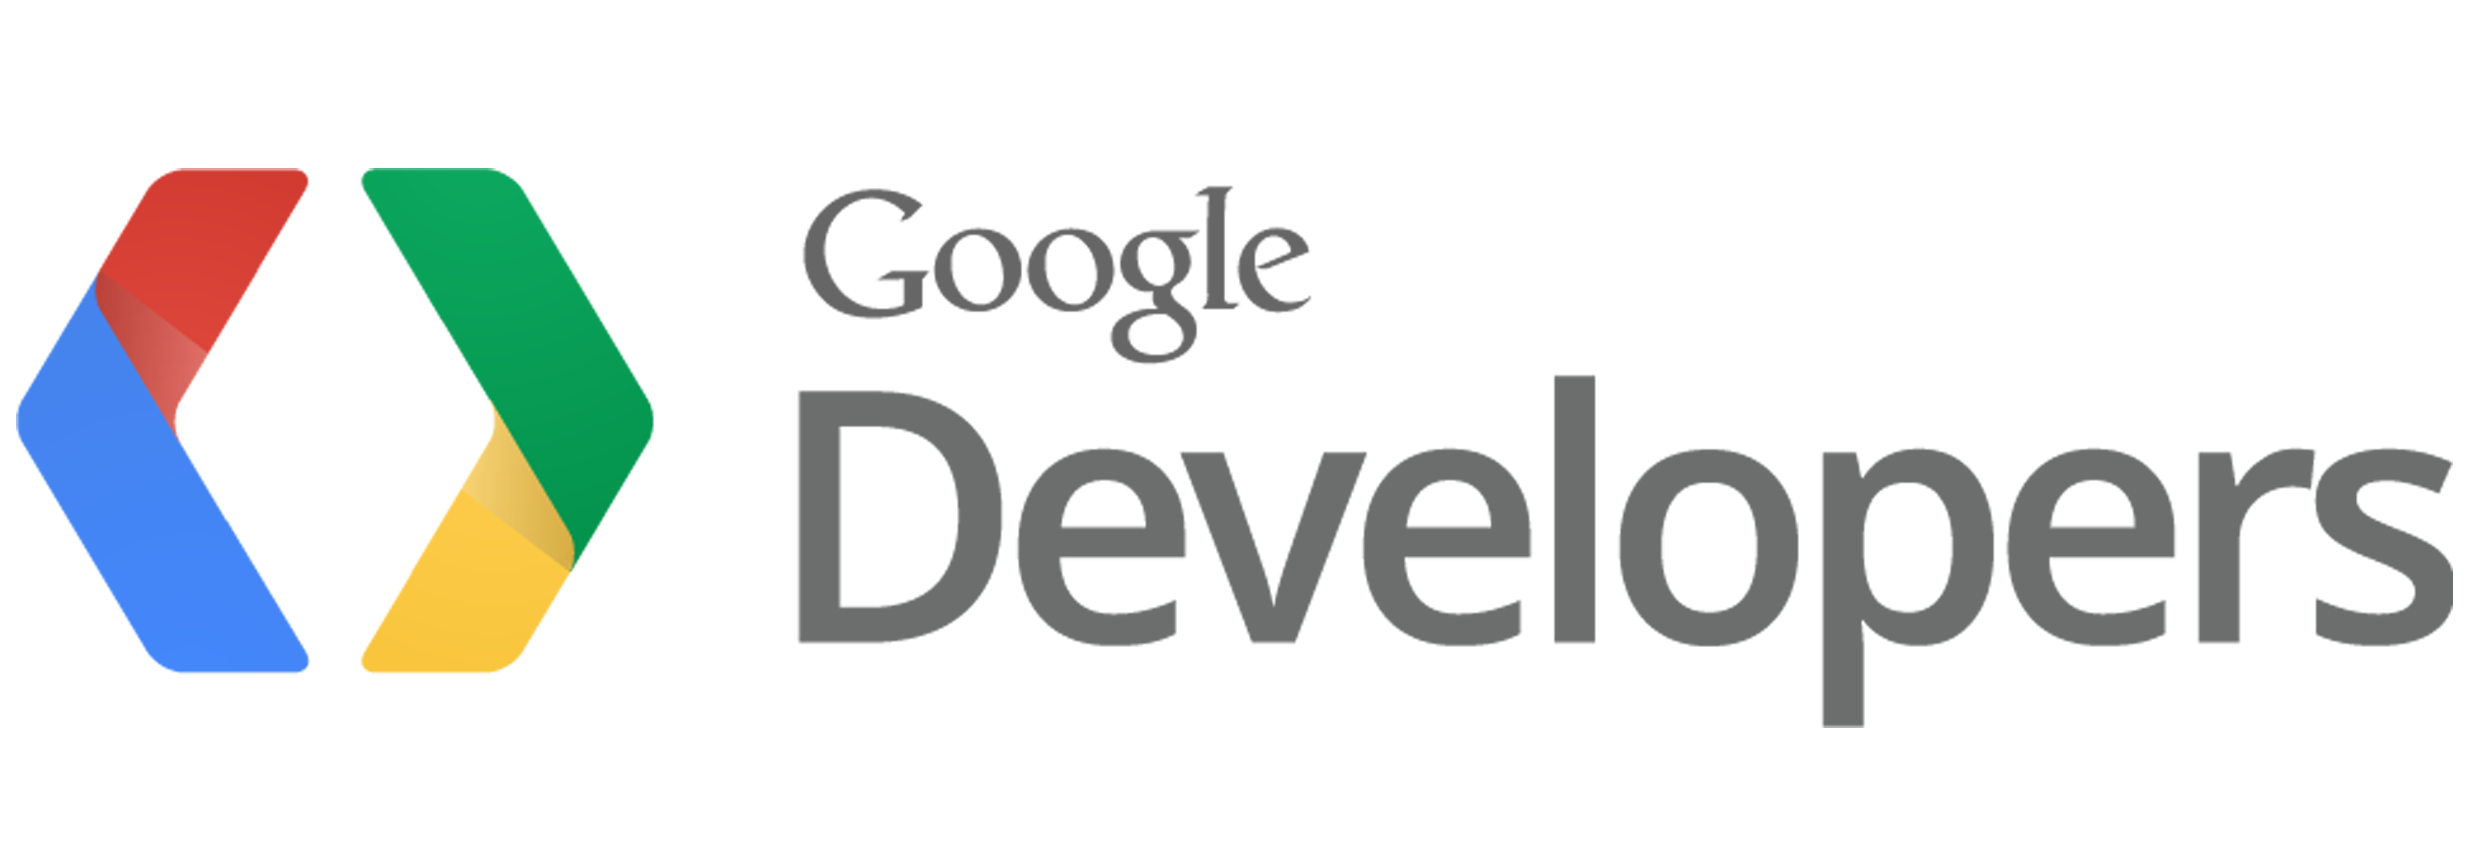  Google Developers Summit - Cairo December 2015